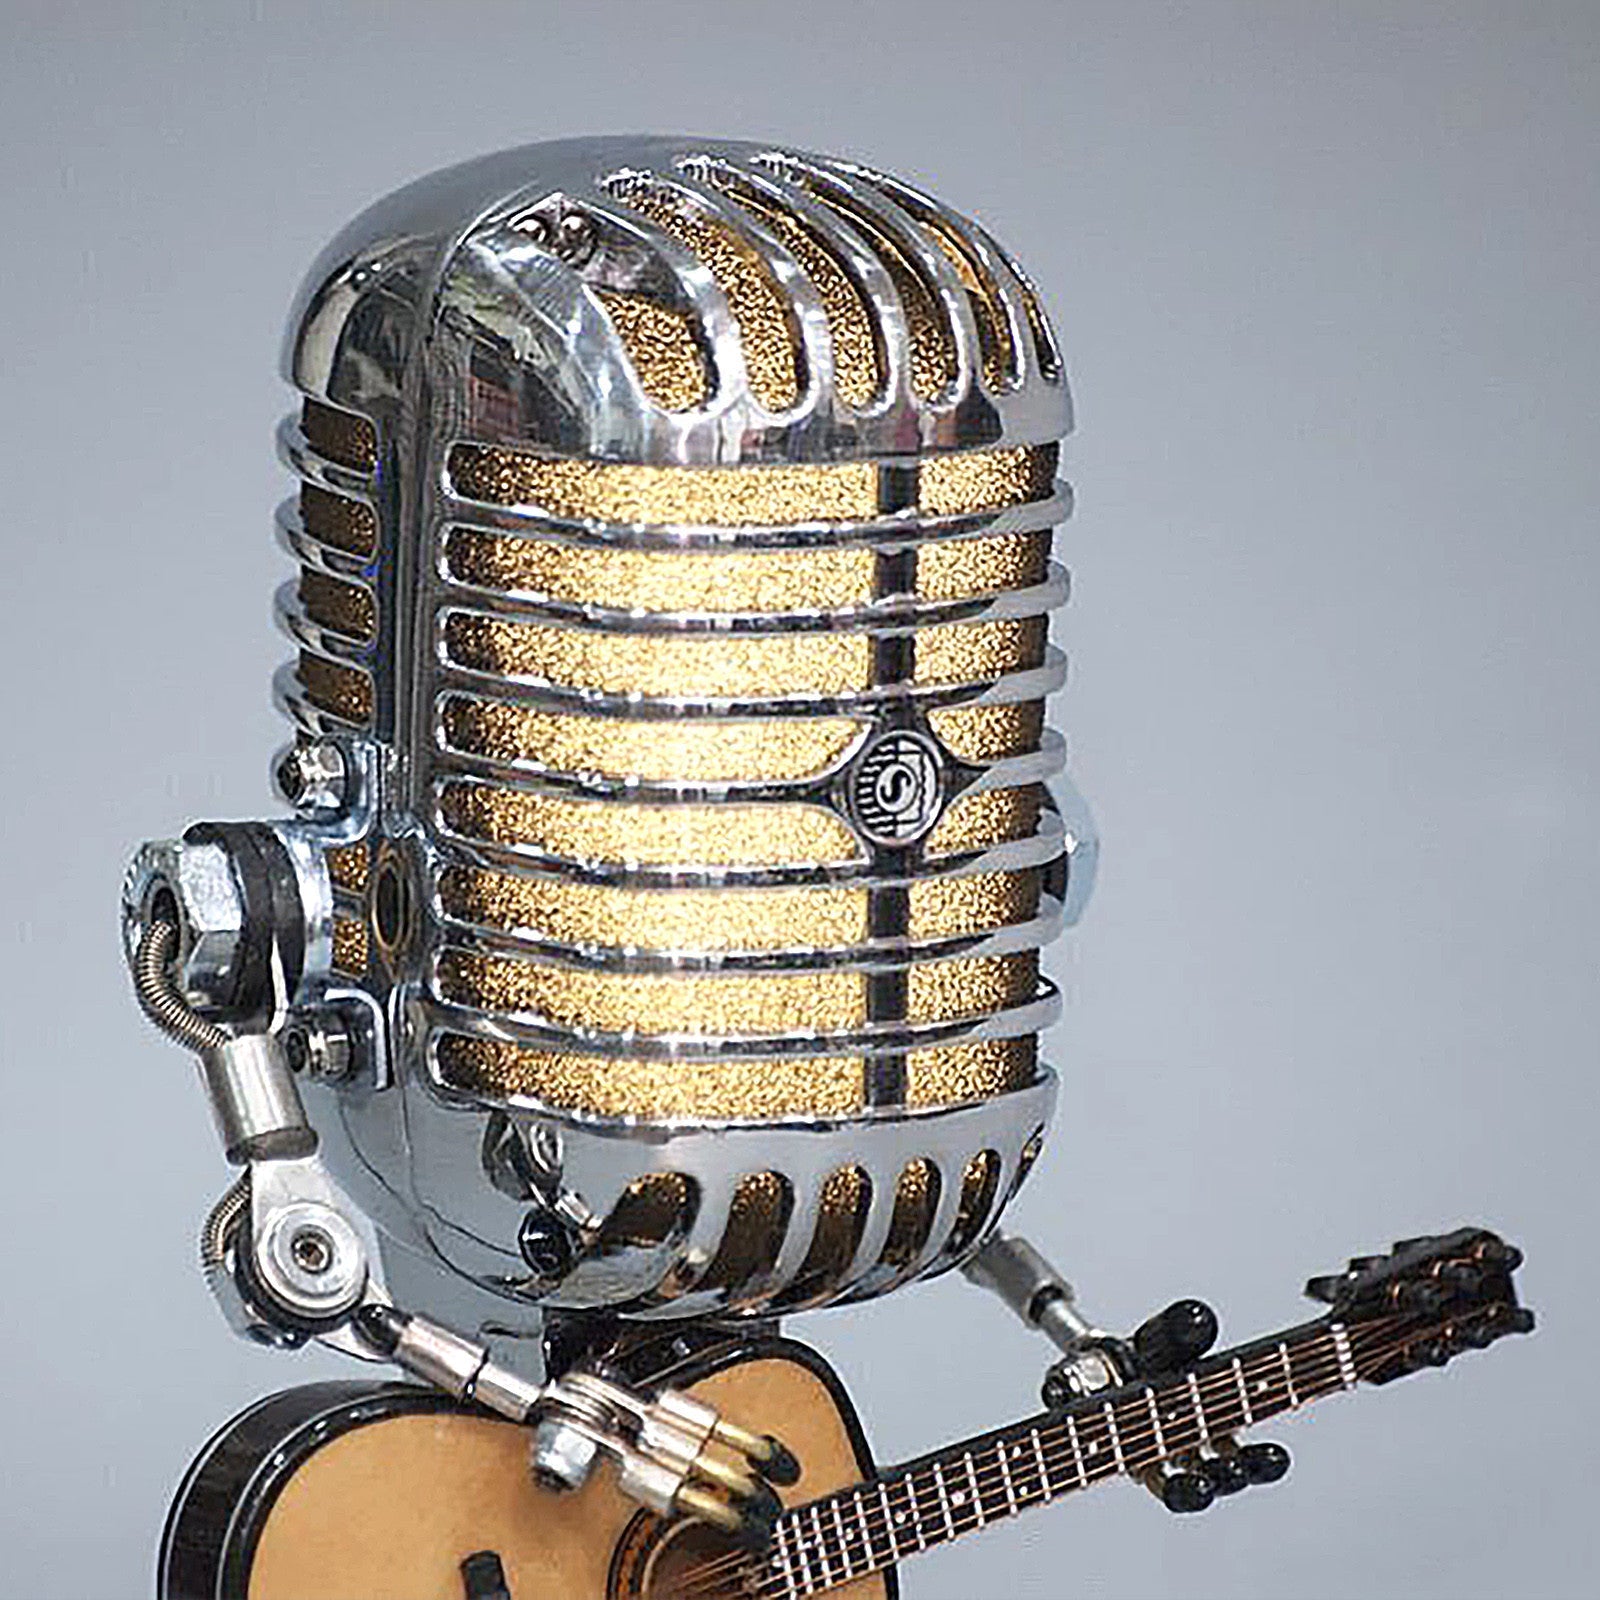 Vintage Guitar Playing Microphone Robot Lamp